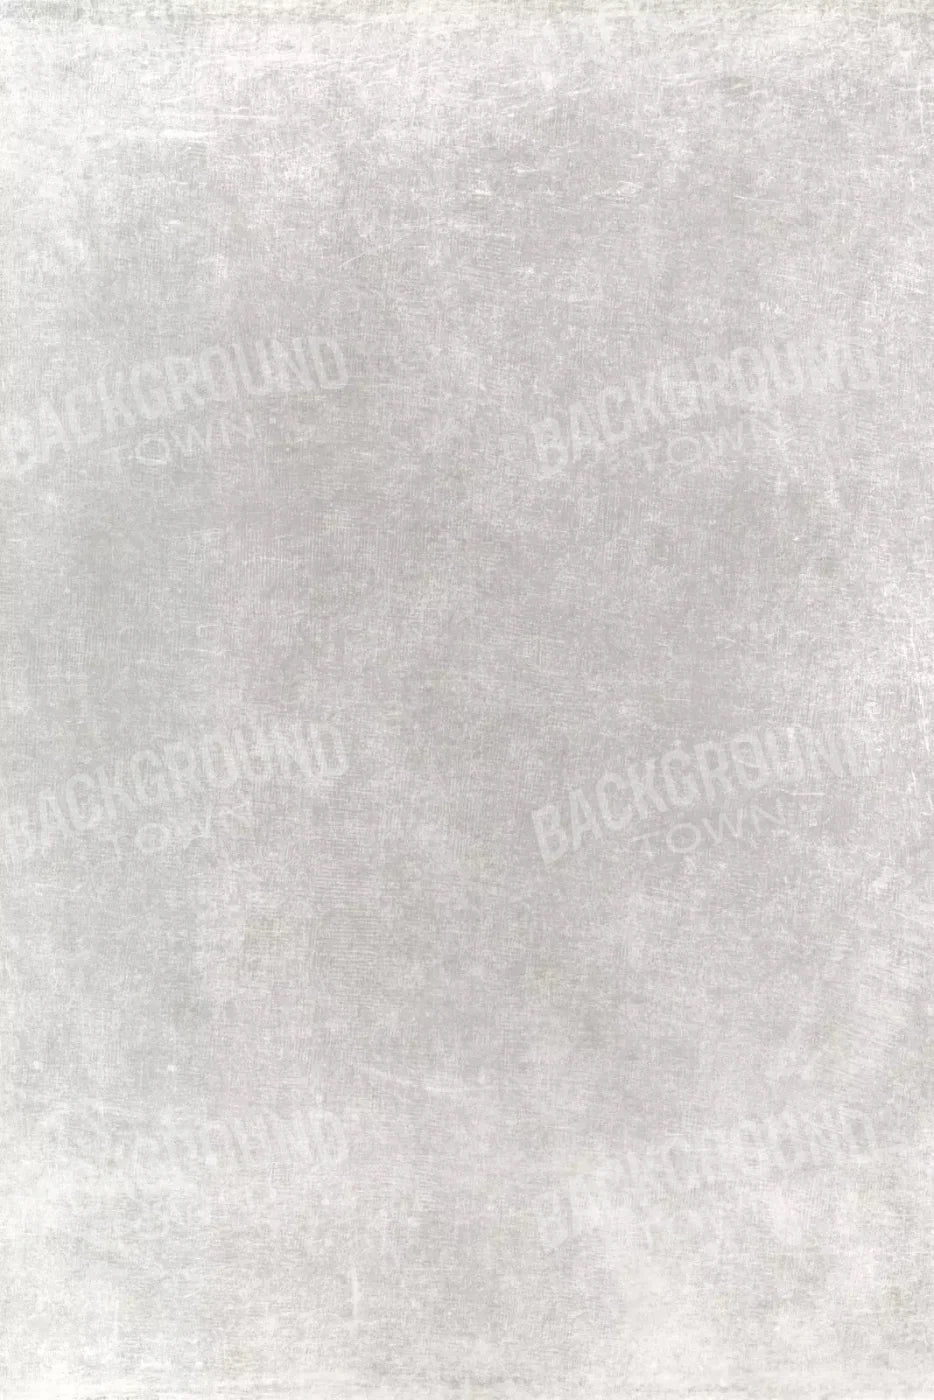 Classic Texture Light Warm Gray 5X8 Ultracloth ( 60 X 96 Inch ) Backdrop